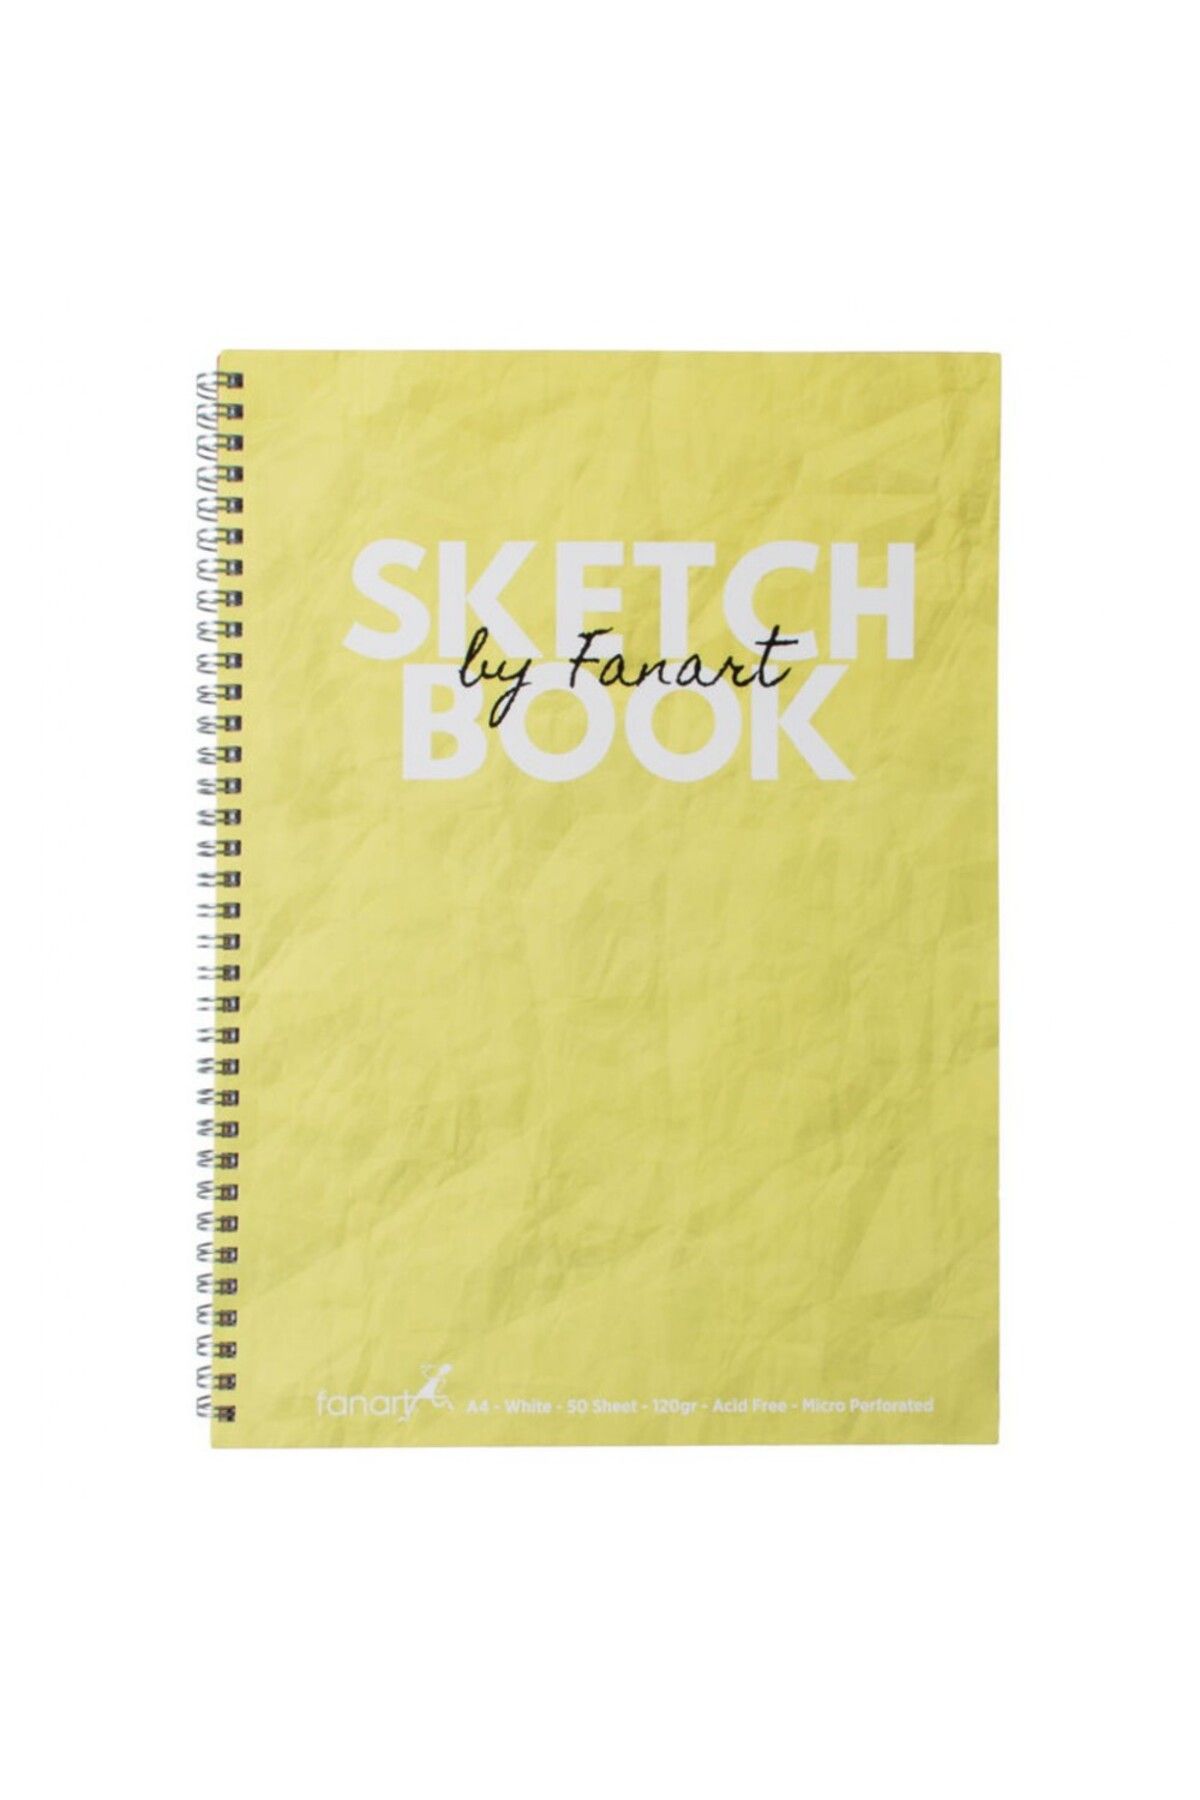 Fanart Sketch Book (ESKİZ DEFTERİ) A4 Spiralli 120 gr Beyaz Kağıt- Sarı